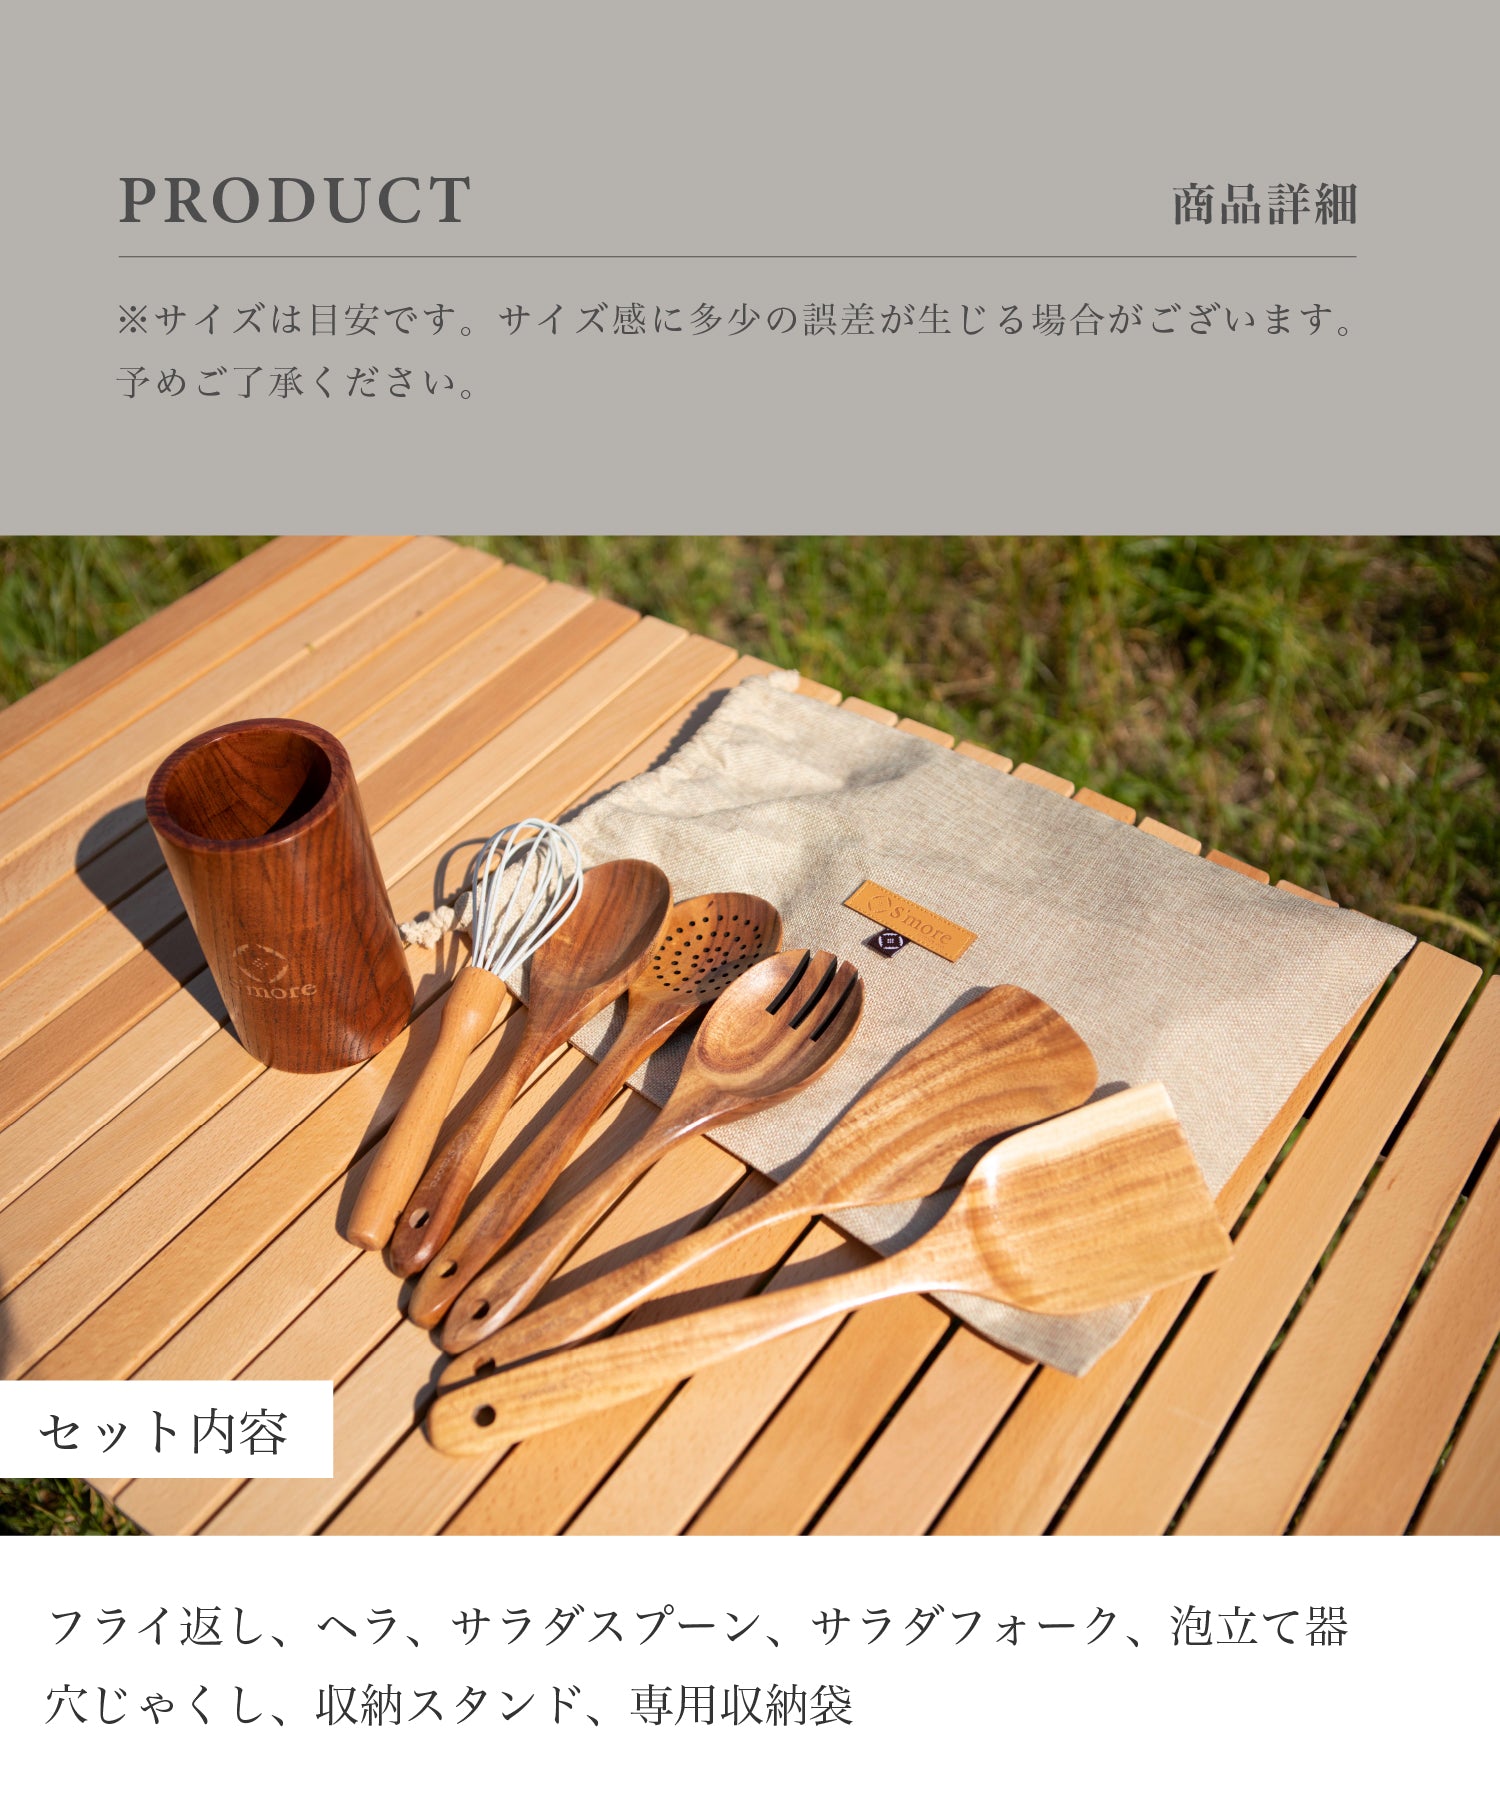 Kithen tools 7set 】 キッチンツール7点セット 木製 – S'more